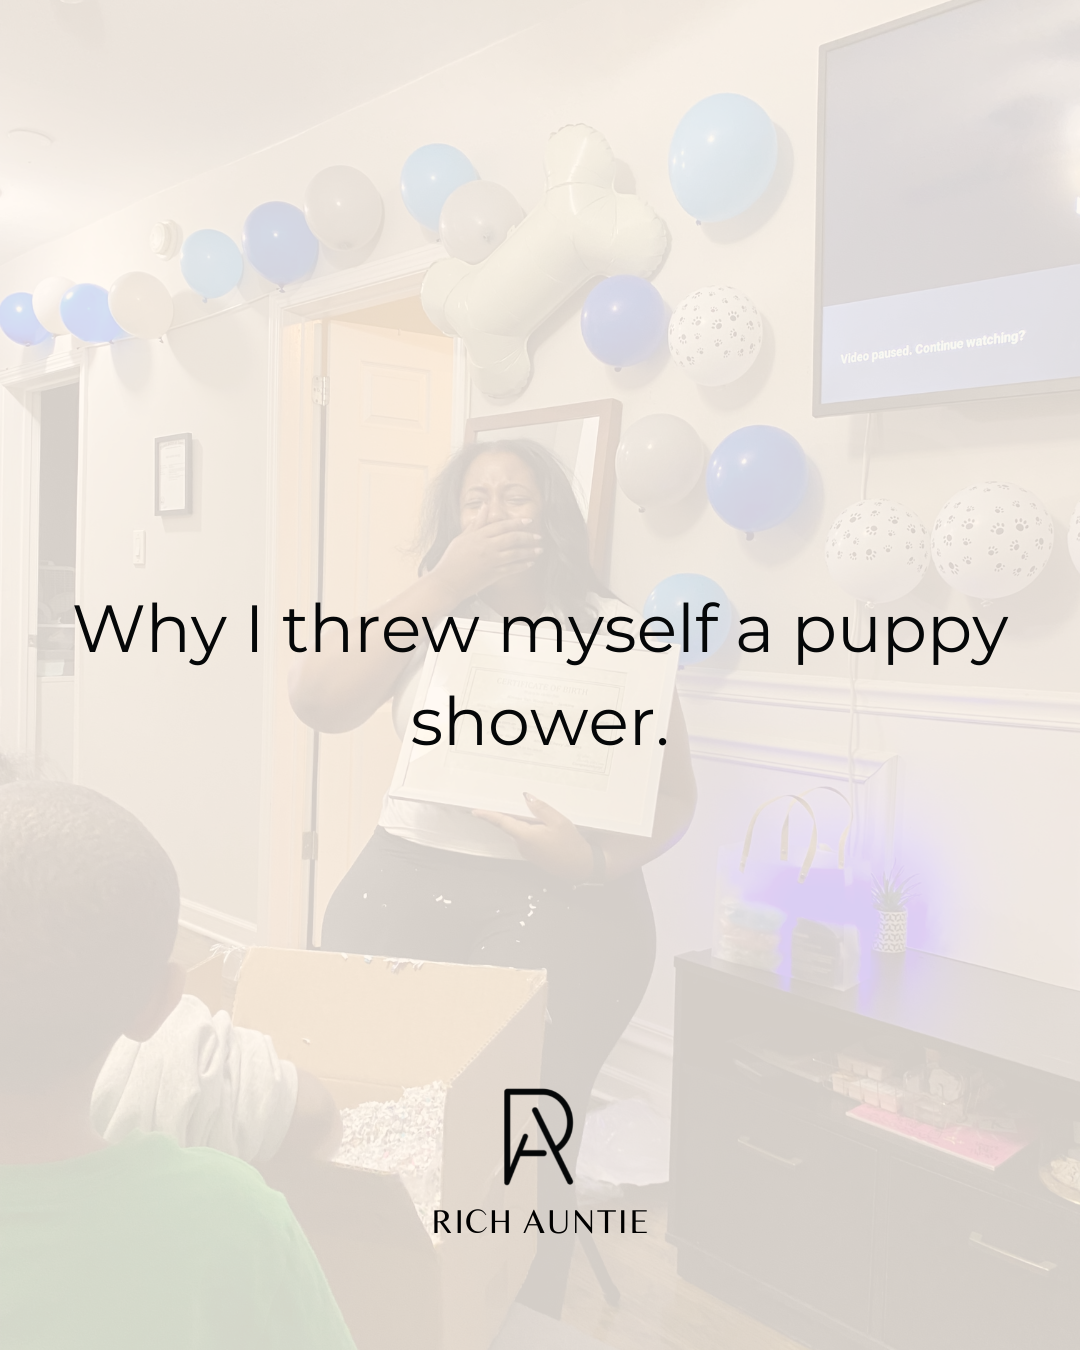 Why I threw myself a puppy shower.